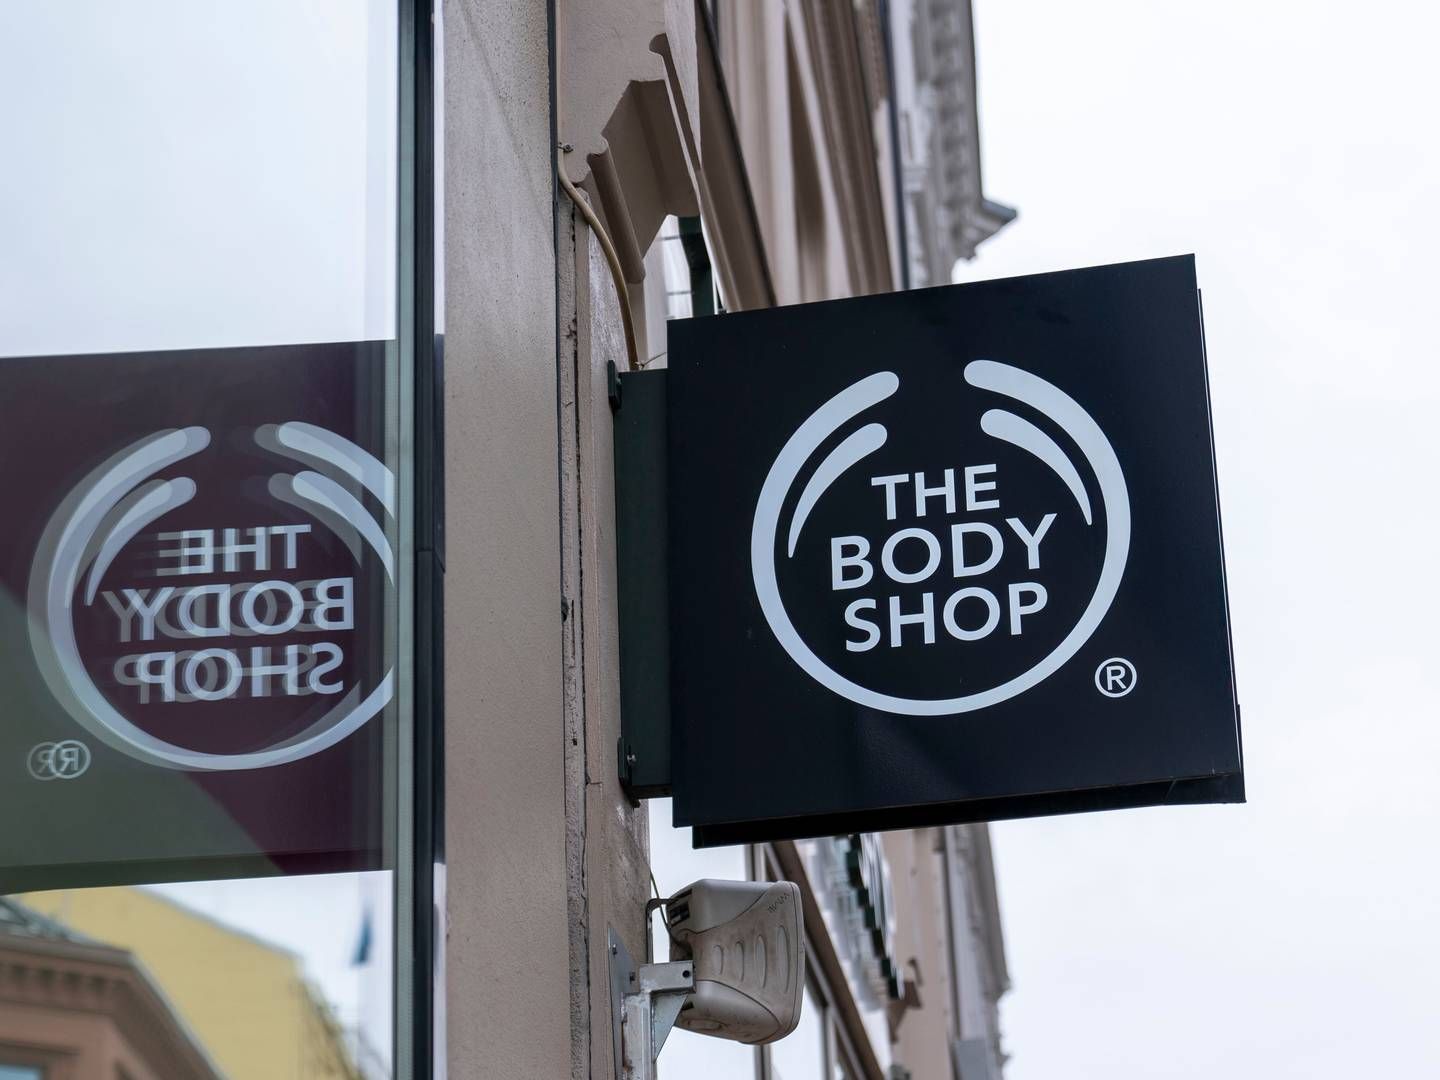 KONKURS: Kosmetikkjeden The Body Shop er konkurs i Danmark. | Foto: Ludvig Heiberg Larsen / NTB